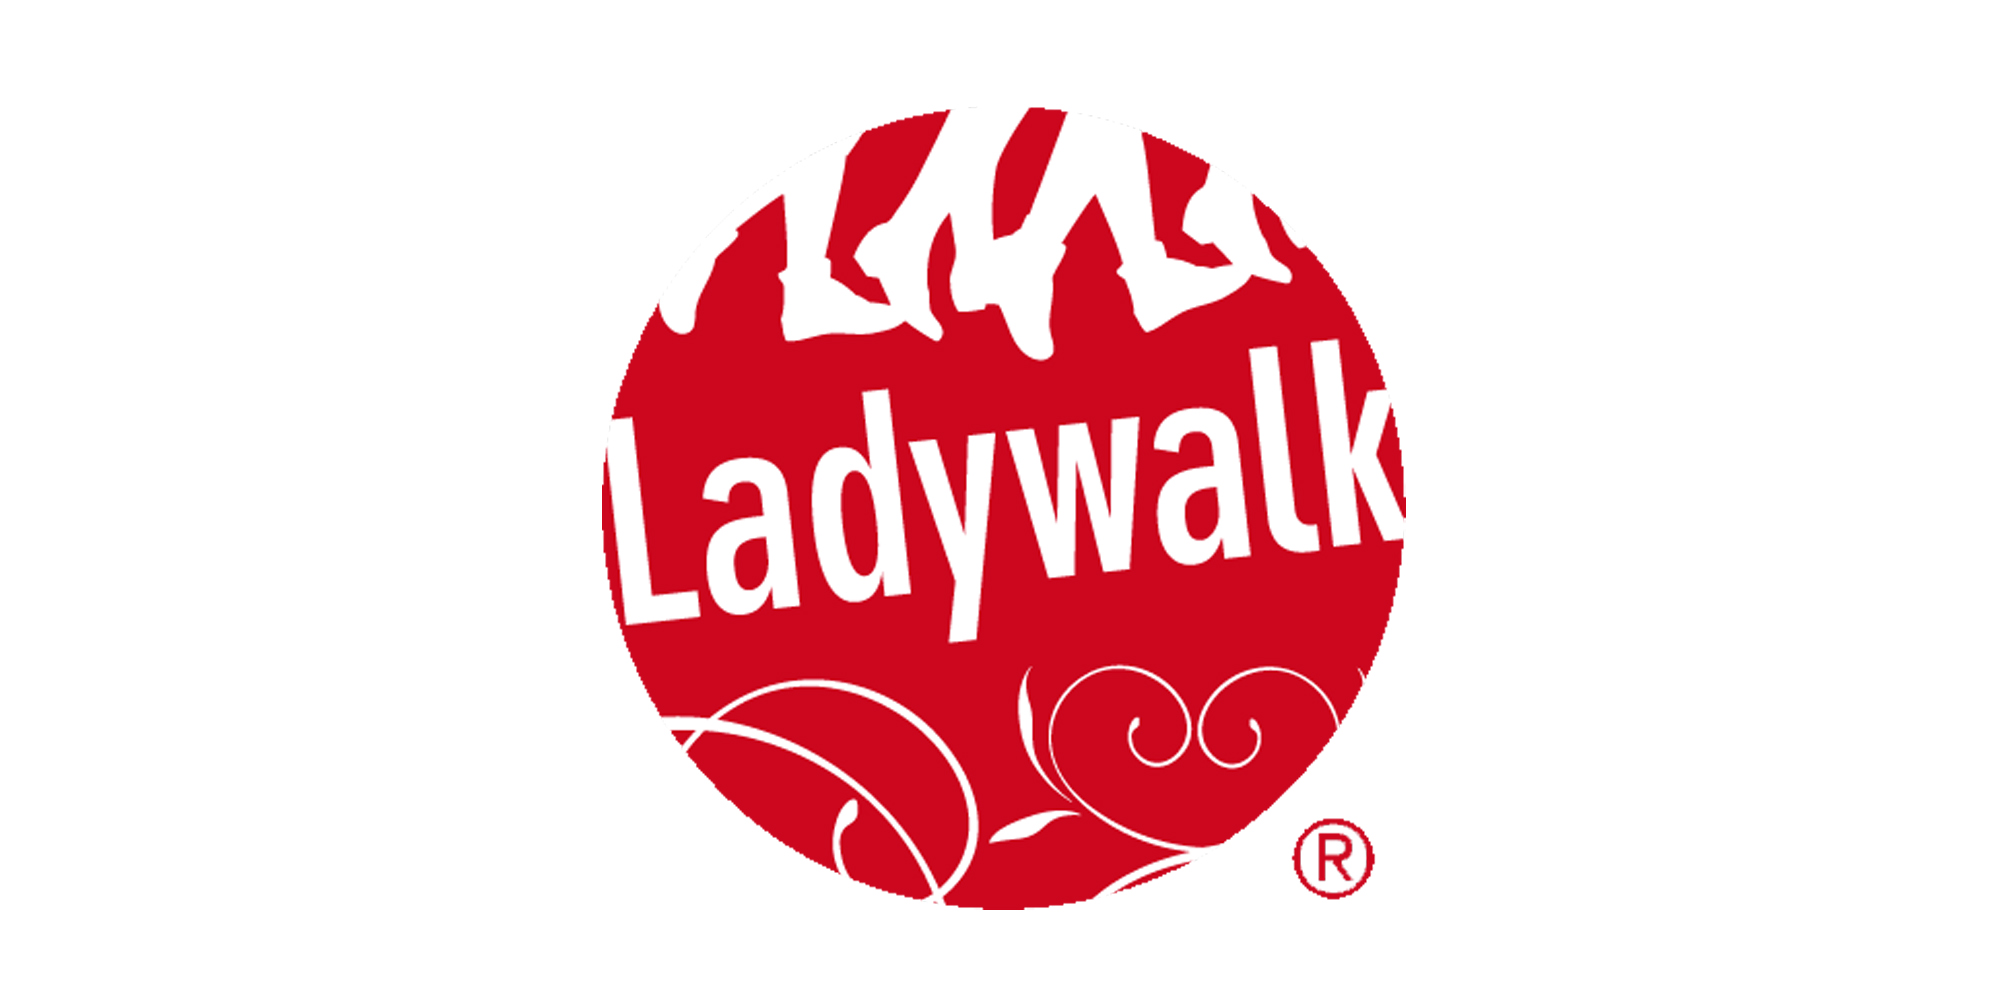 FOF Sønderjylland Ladywalk logo hvid logo